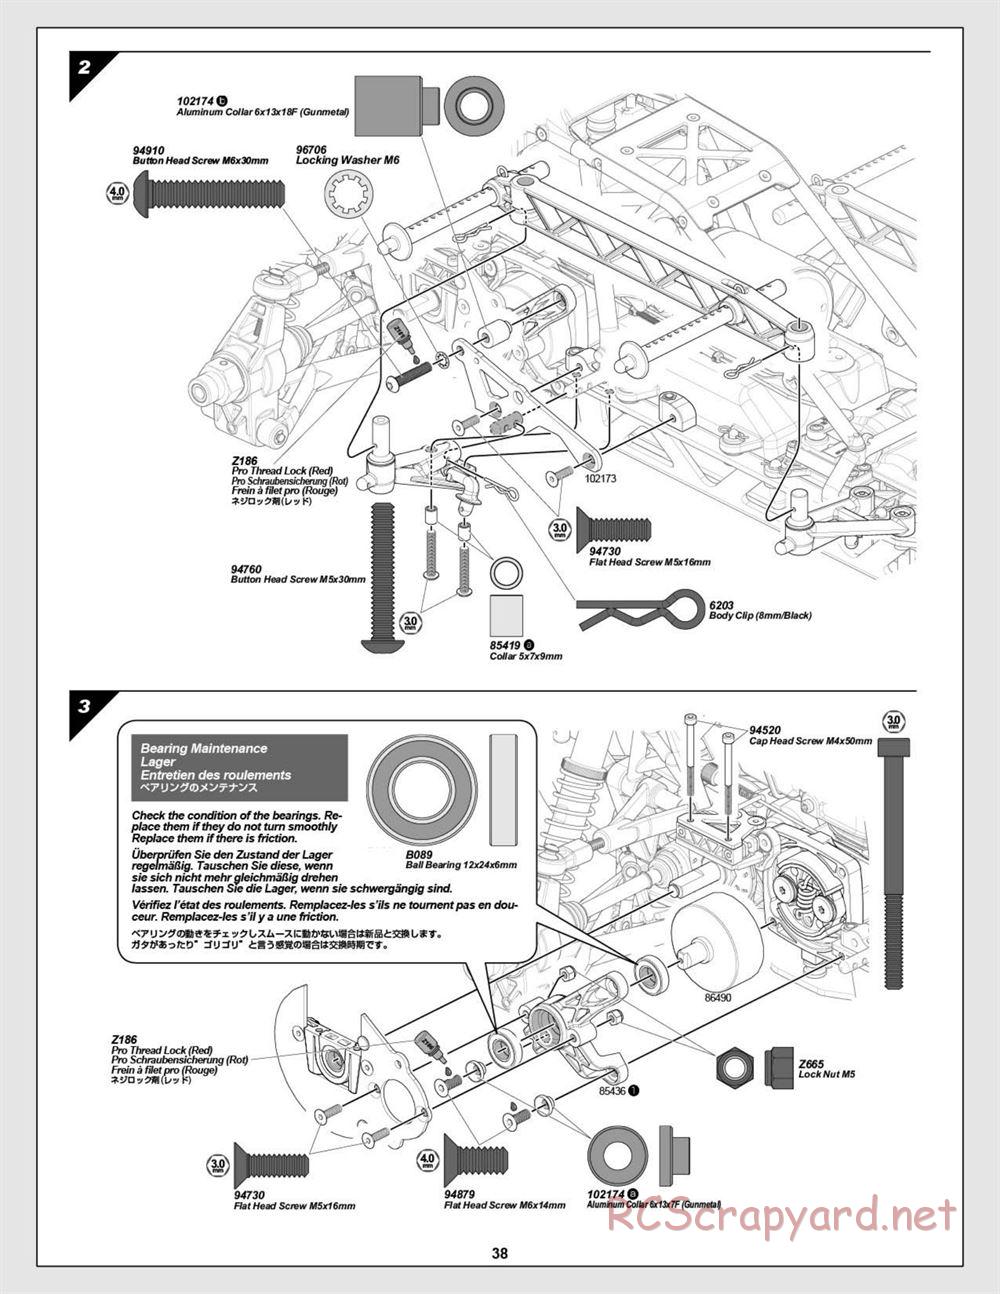 HPI - Baja 5R - Manual - Page 38